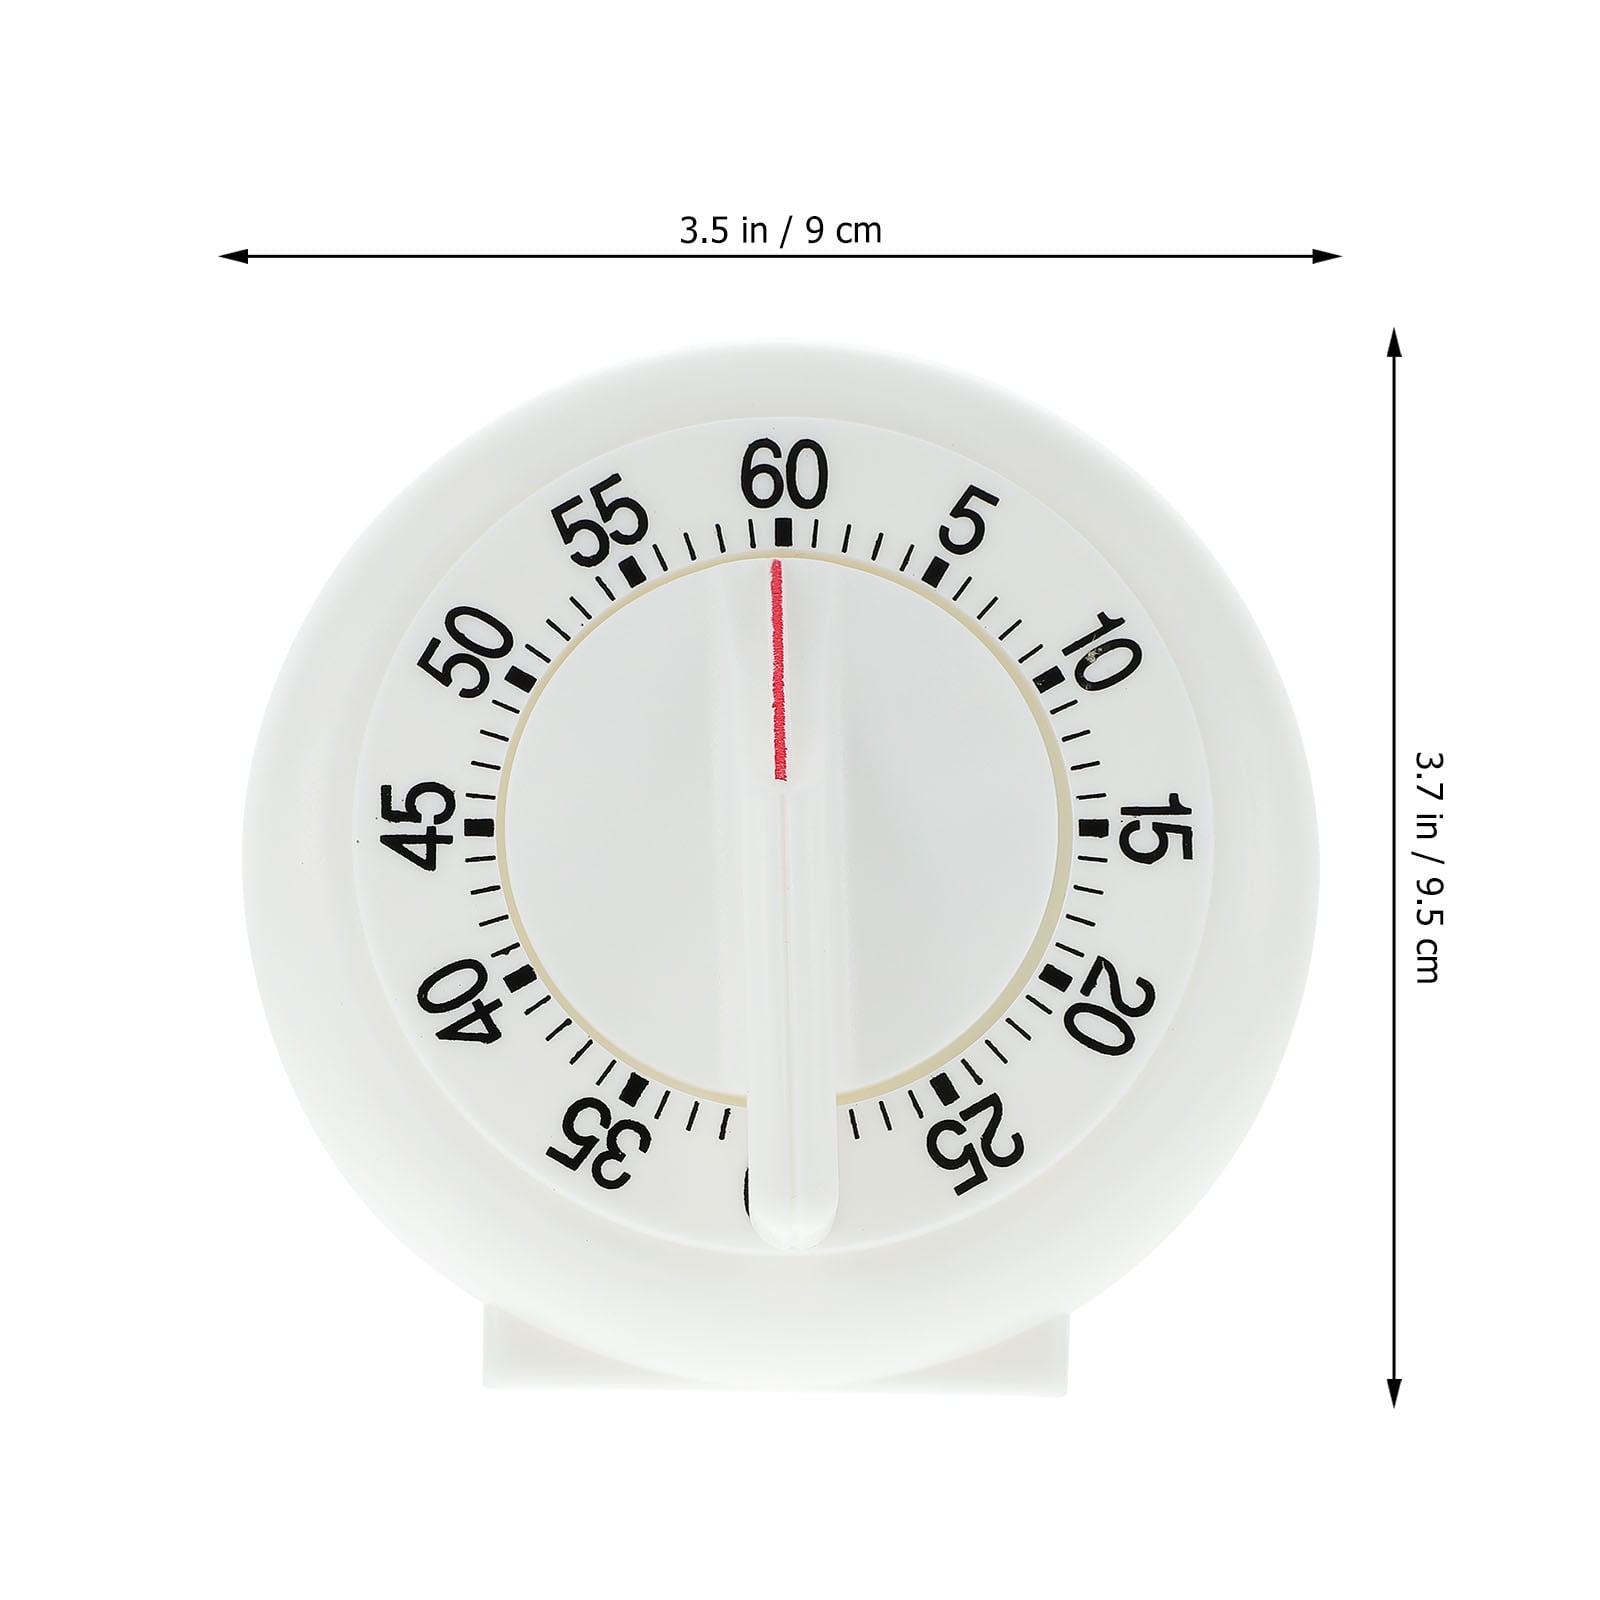 Mechanical Timer Kitchen Device Gadget Sets Egg Boiling Cooking Countdown Temporizador  Cocina Minuteur Cuisine